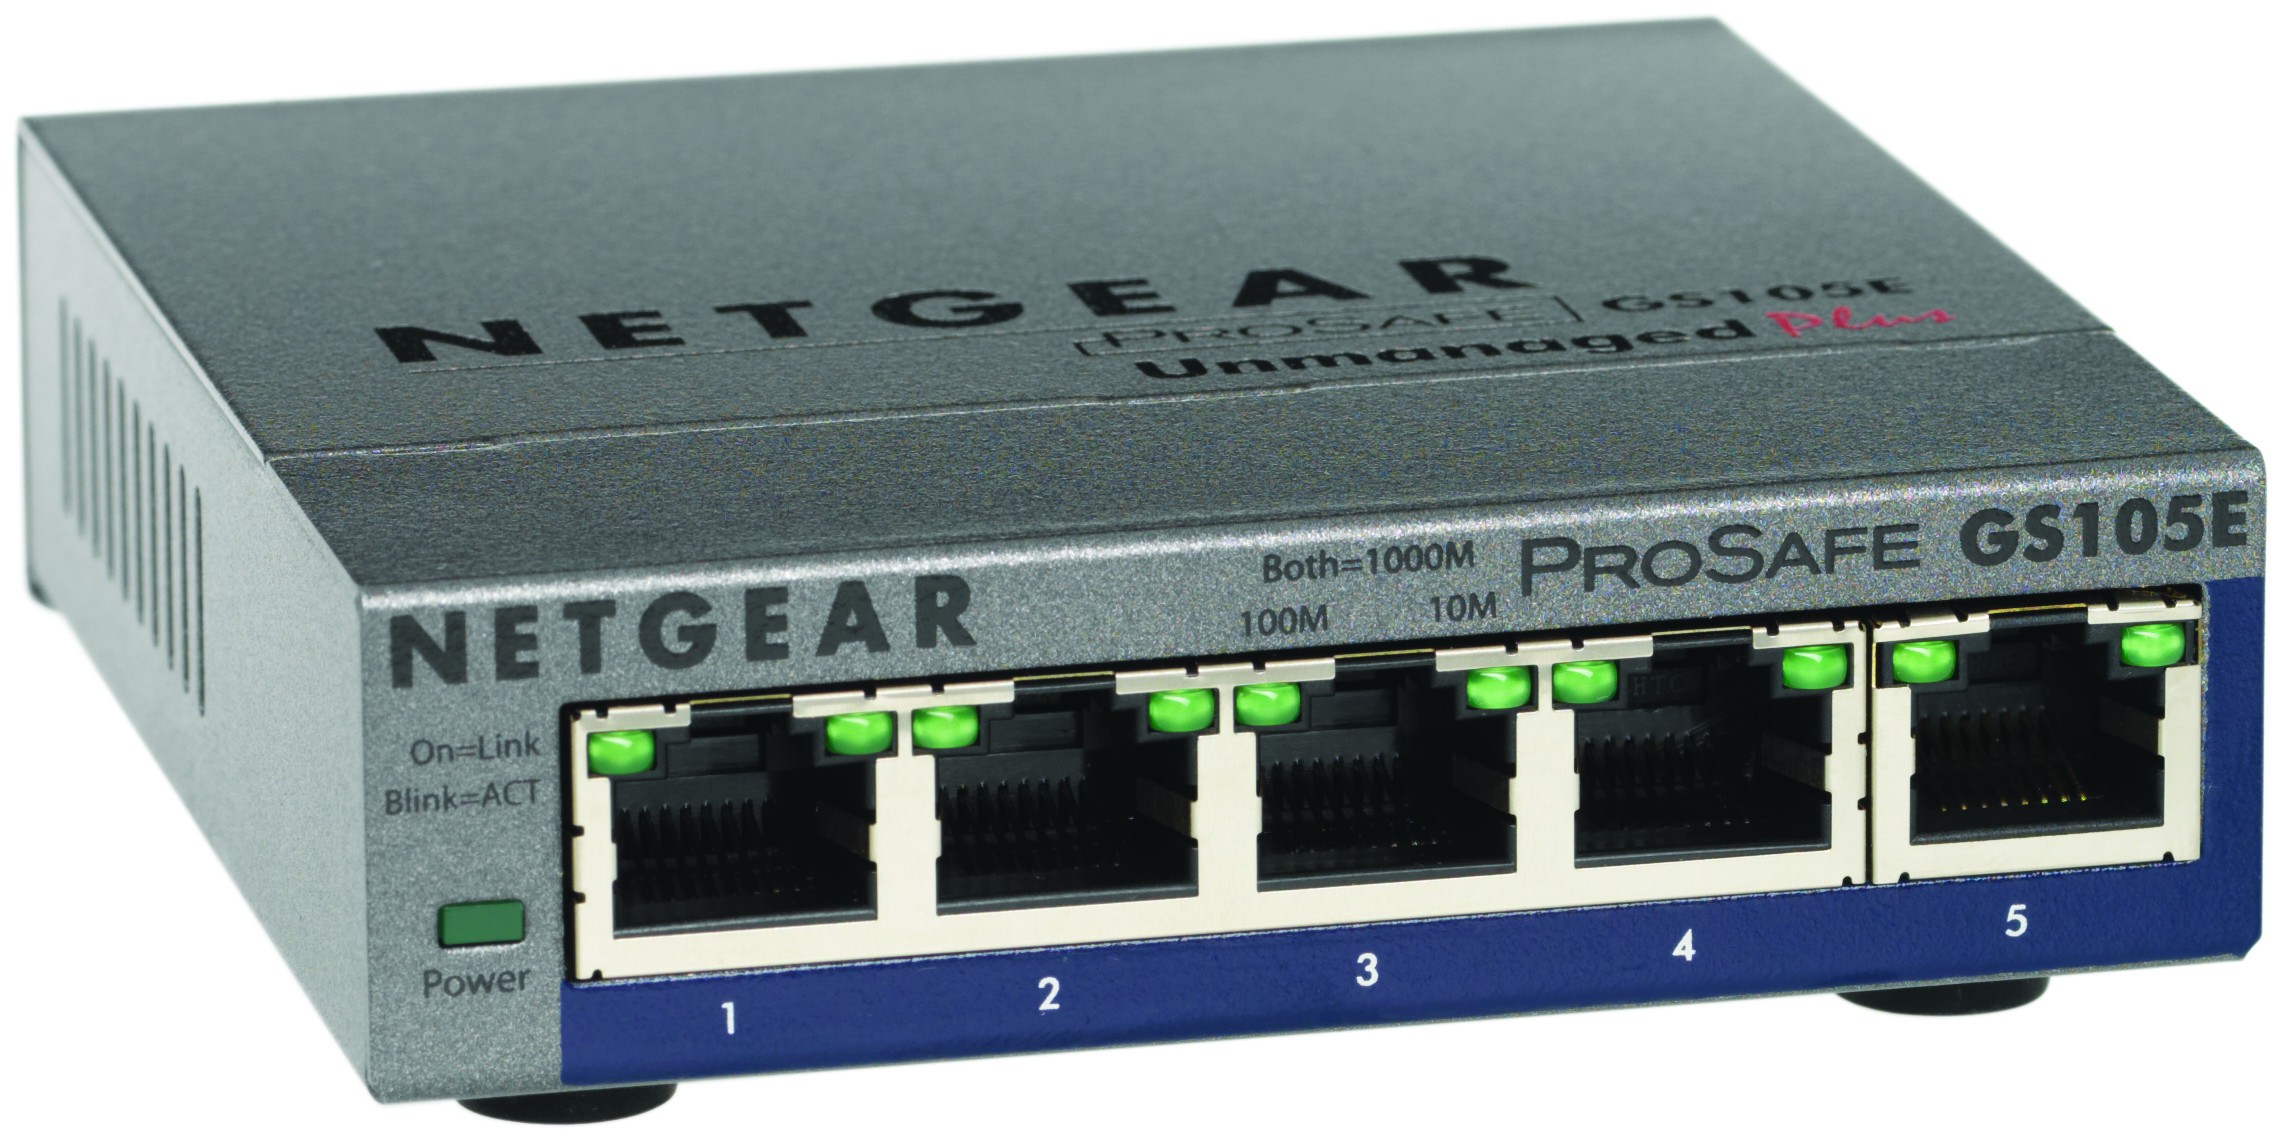 Netgear Gigabit Ethernet Switch Desktop Smart Managed 10/100/1000Mbps 5 Port GS105E